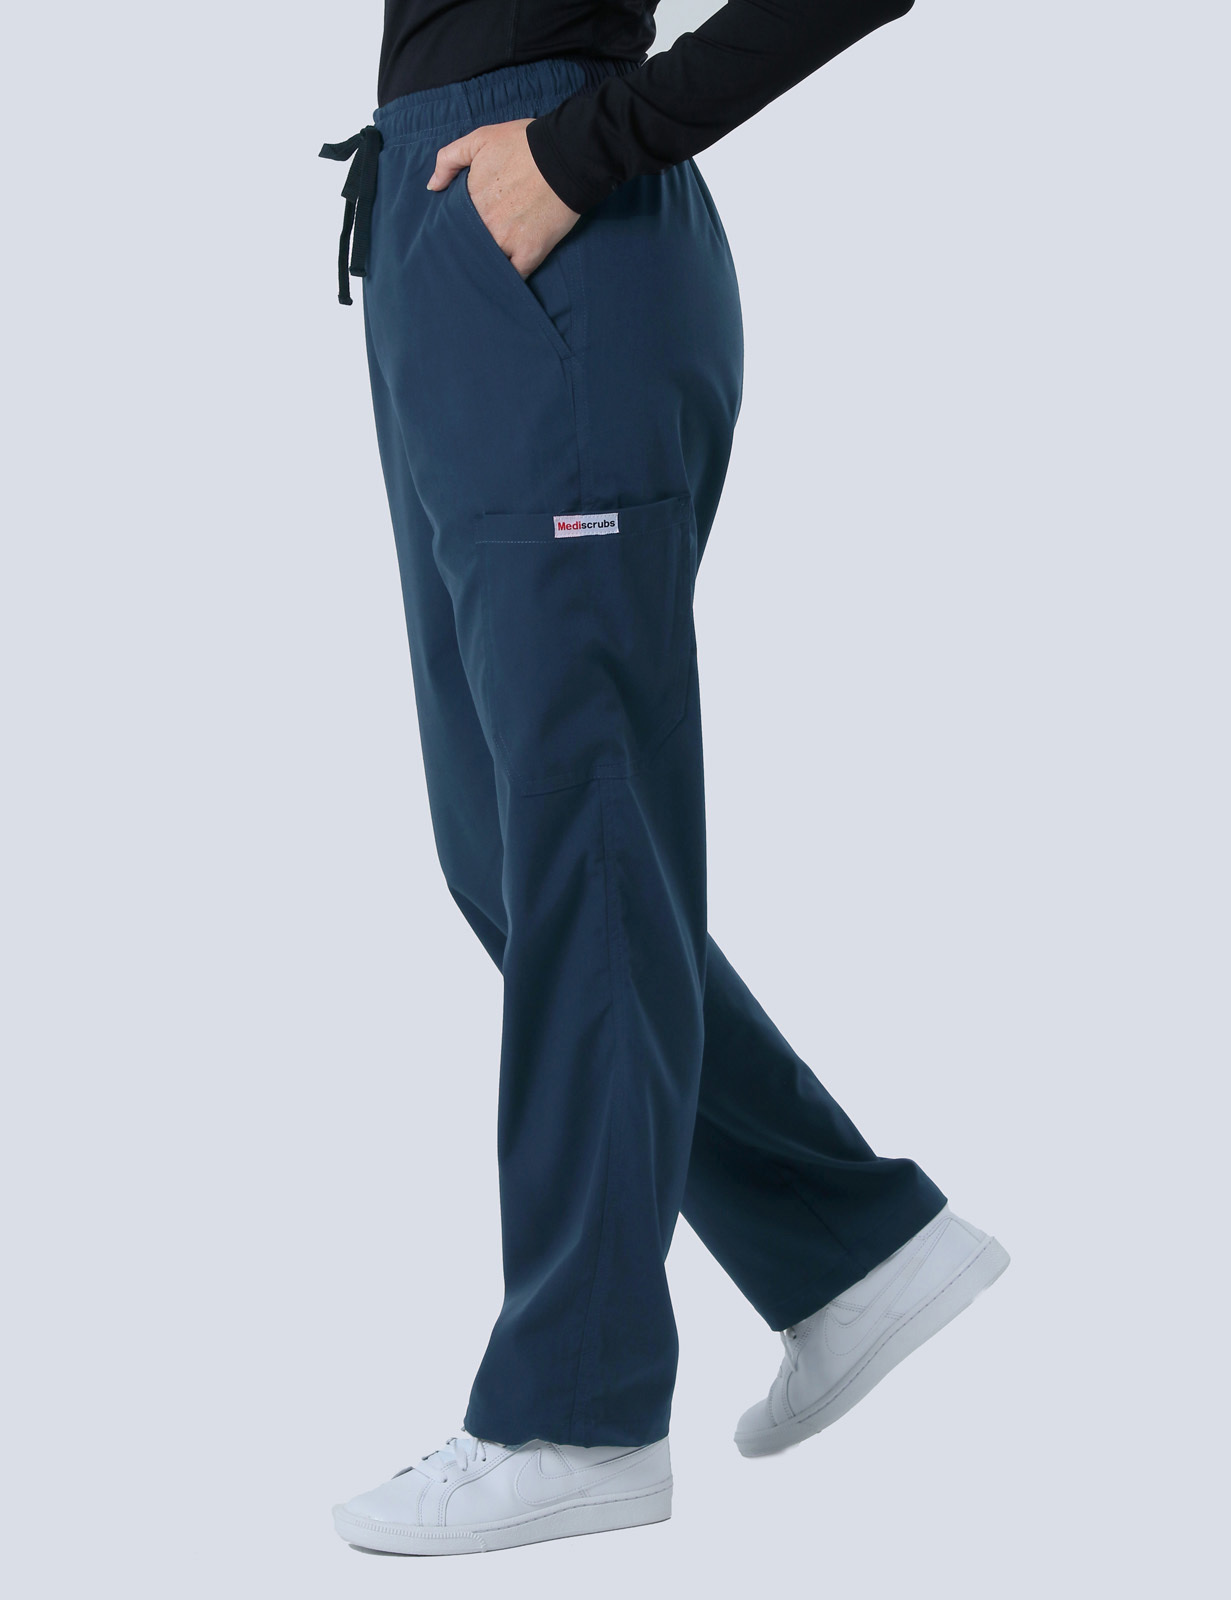 Rockhampton Hospital Emergency Department Registered Nurse Uniform Set Bundle (4 Pocket Top and Cargo Pants in Navy + 3 Logos)